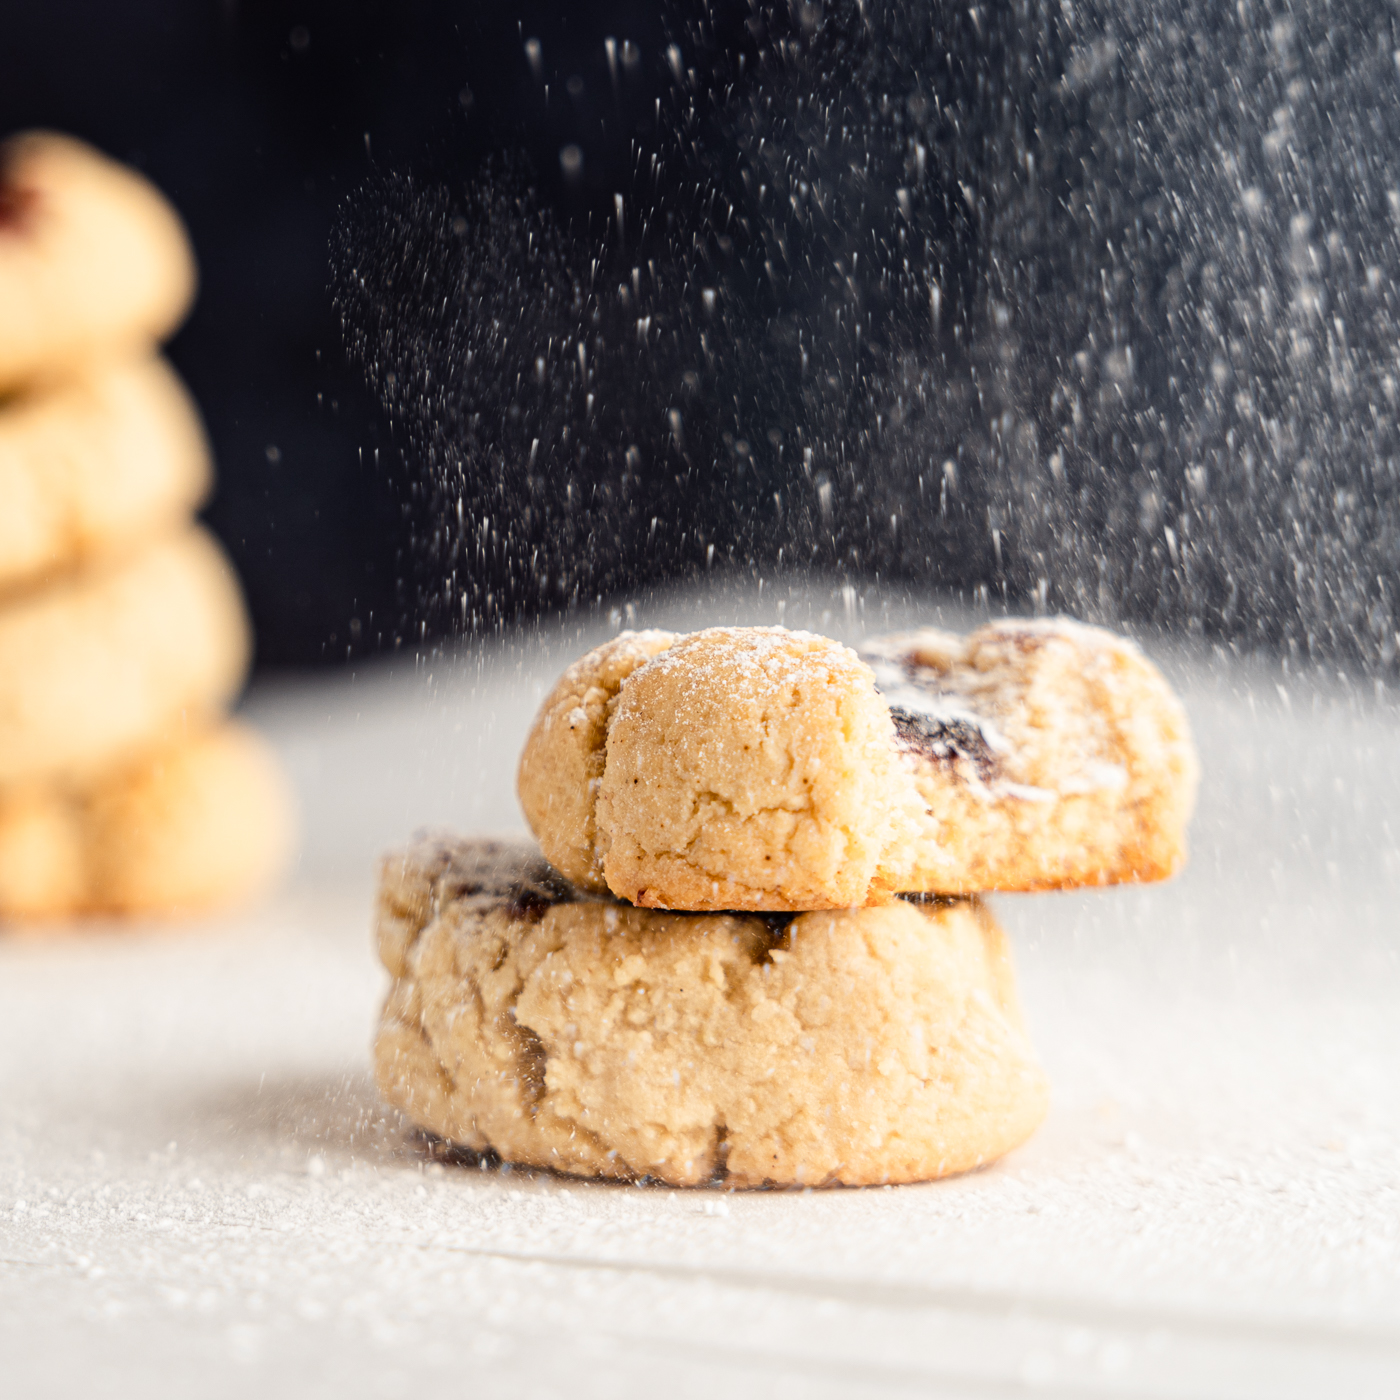 Powdered sugar dusting of an Almond Flour Thumbprint Cookie